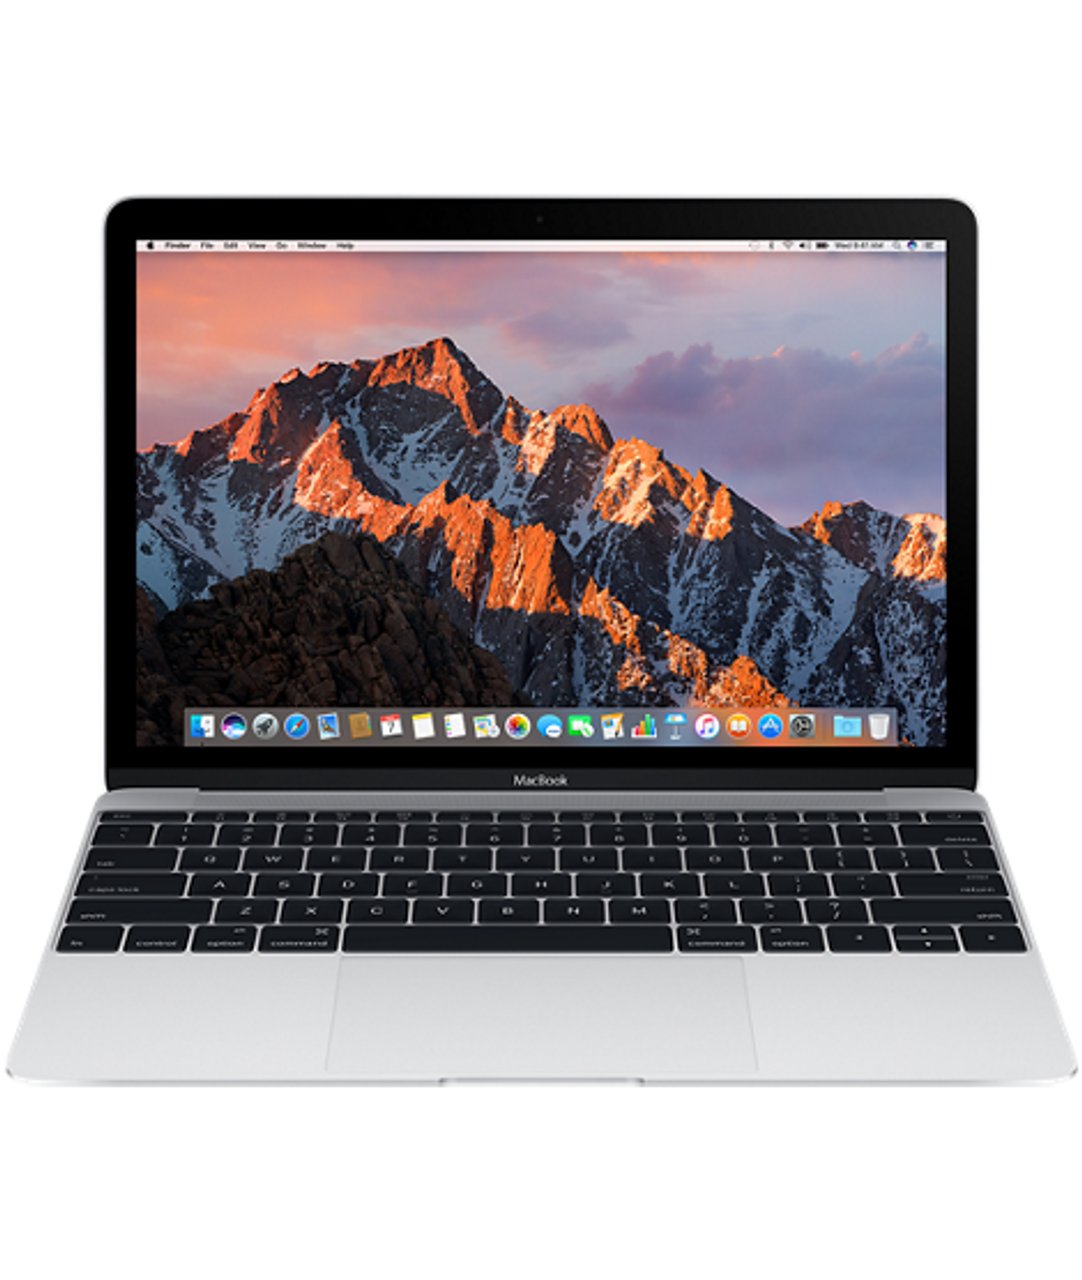 Apple MacBook Retina 12-inch 1.3GHz Core m7 (Early 2016)